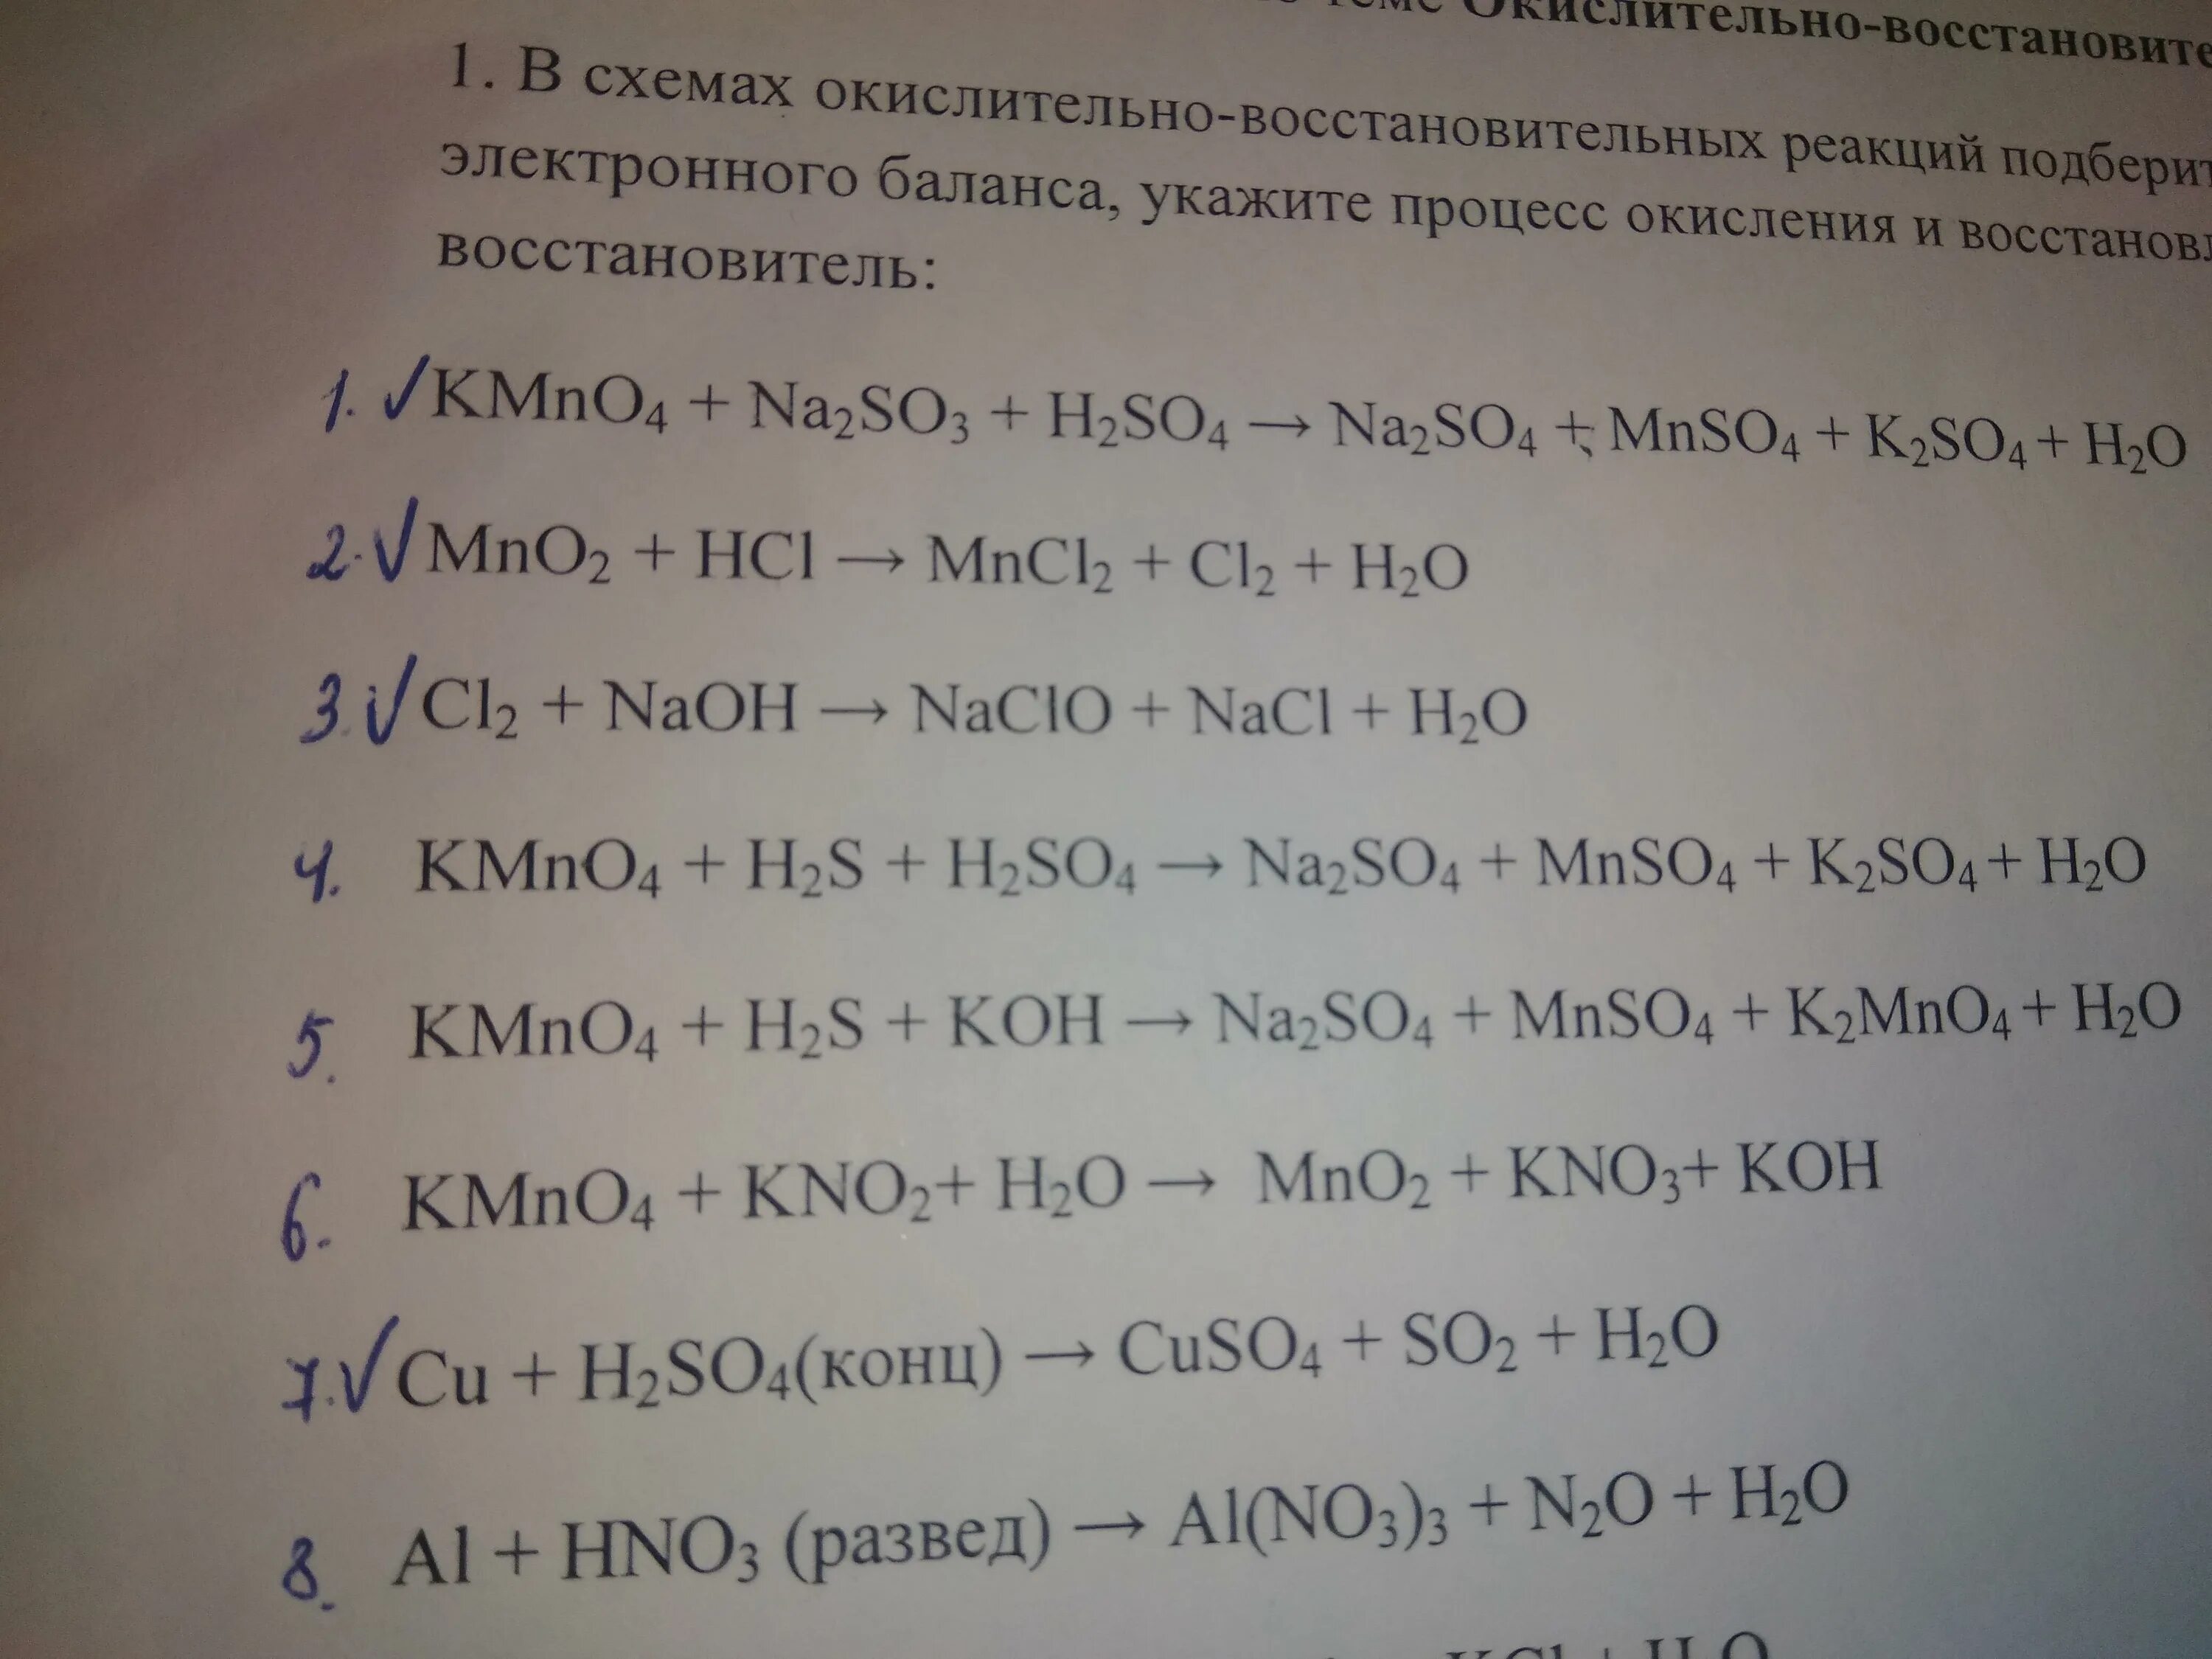 Метан kmno4. K2mno4 h2o kmno4 mno2 Koh степень окисления. 2kmno4 k2mno4 mno2 o2 сумма коэффициентов. Ch3oh kmno4 h2so4. Ph3 kmno4 h2so4 h3po4 mnso4 k2so4 h2o.